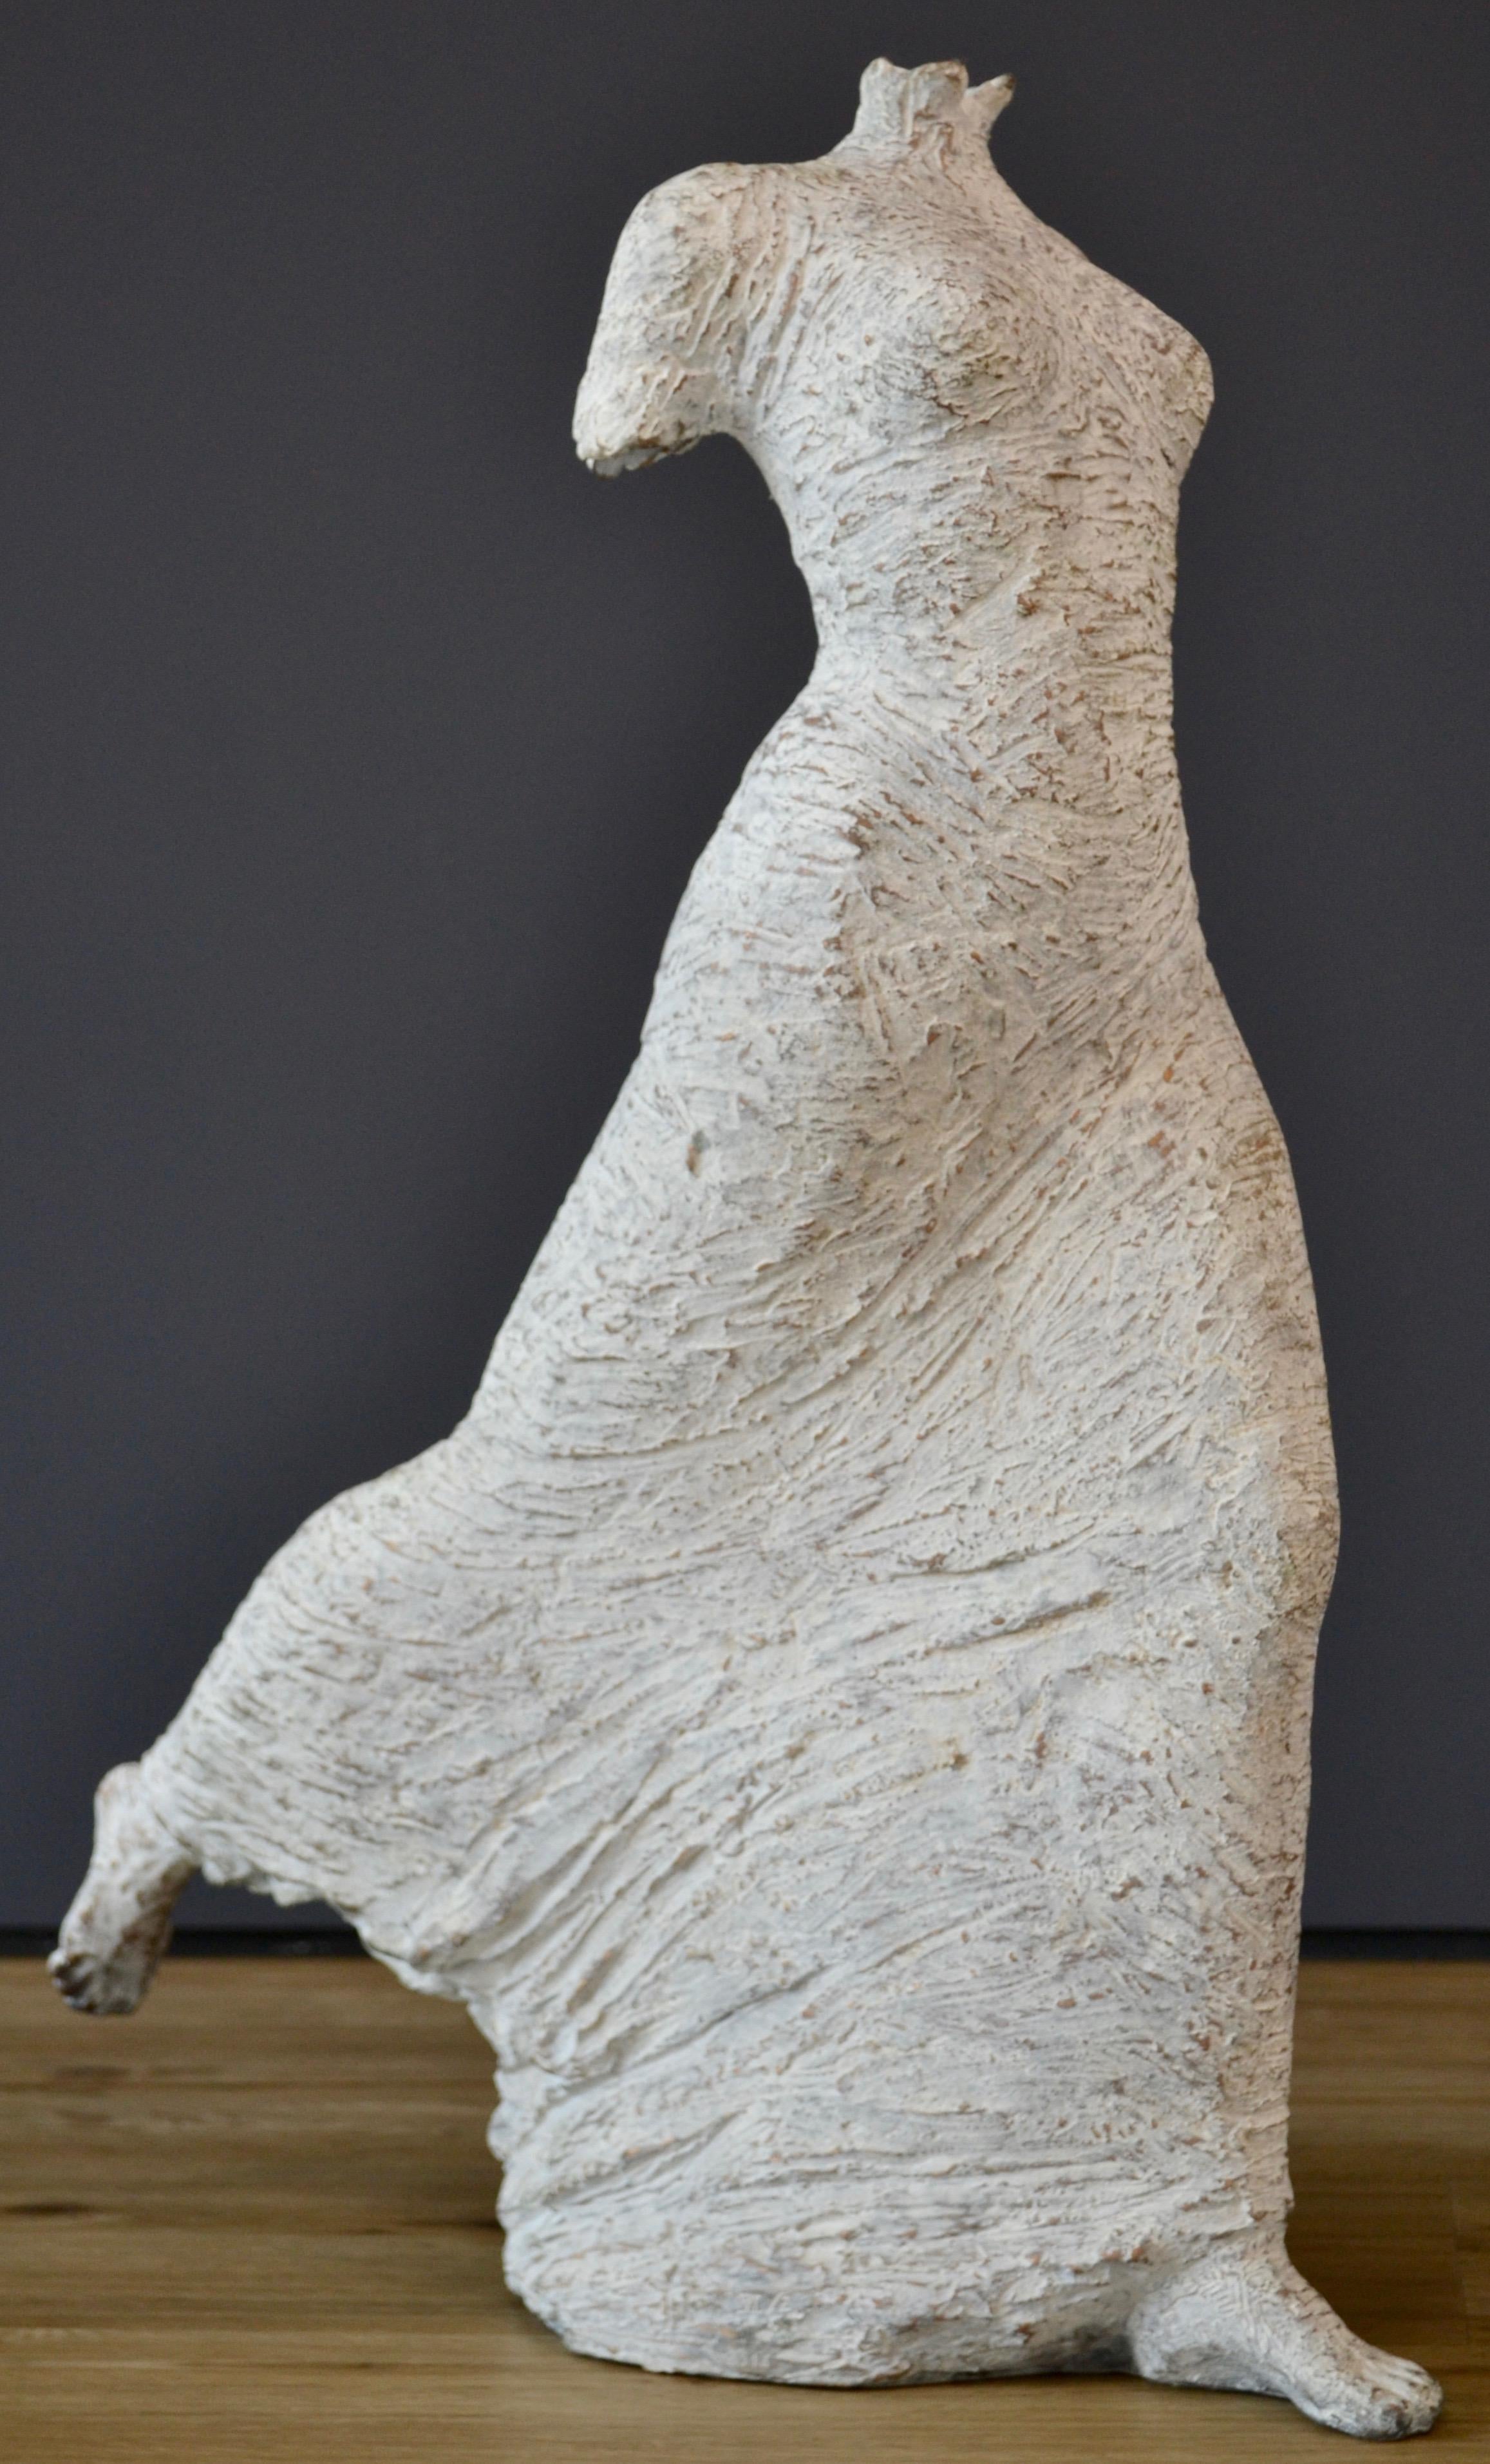 Facile- Escultura italiana contemporánea de bronce de mujer del siglo XXI  - Sculpture de Eva Steiner